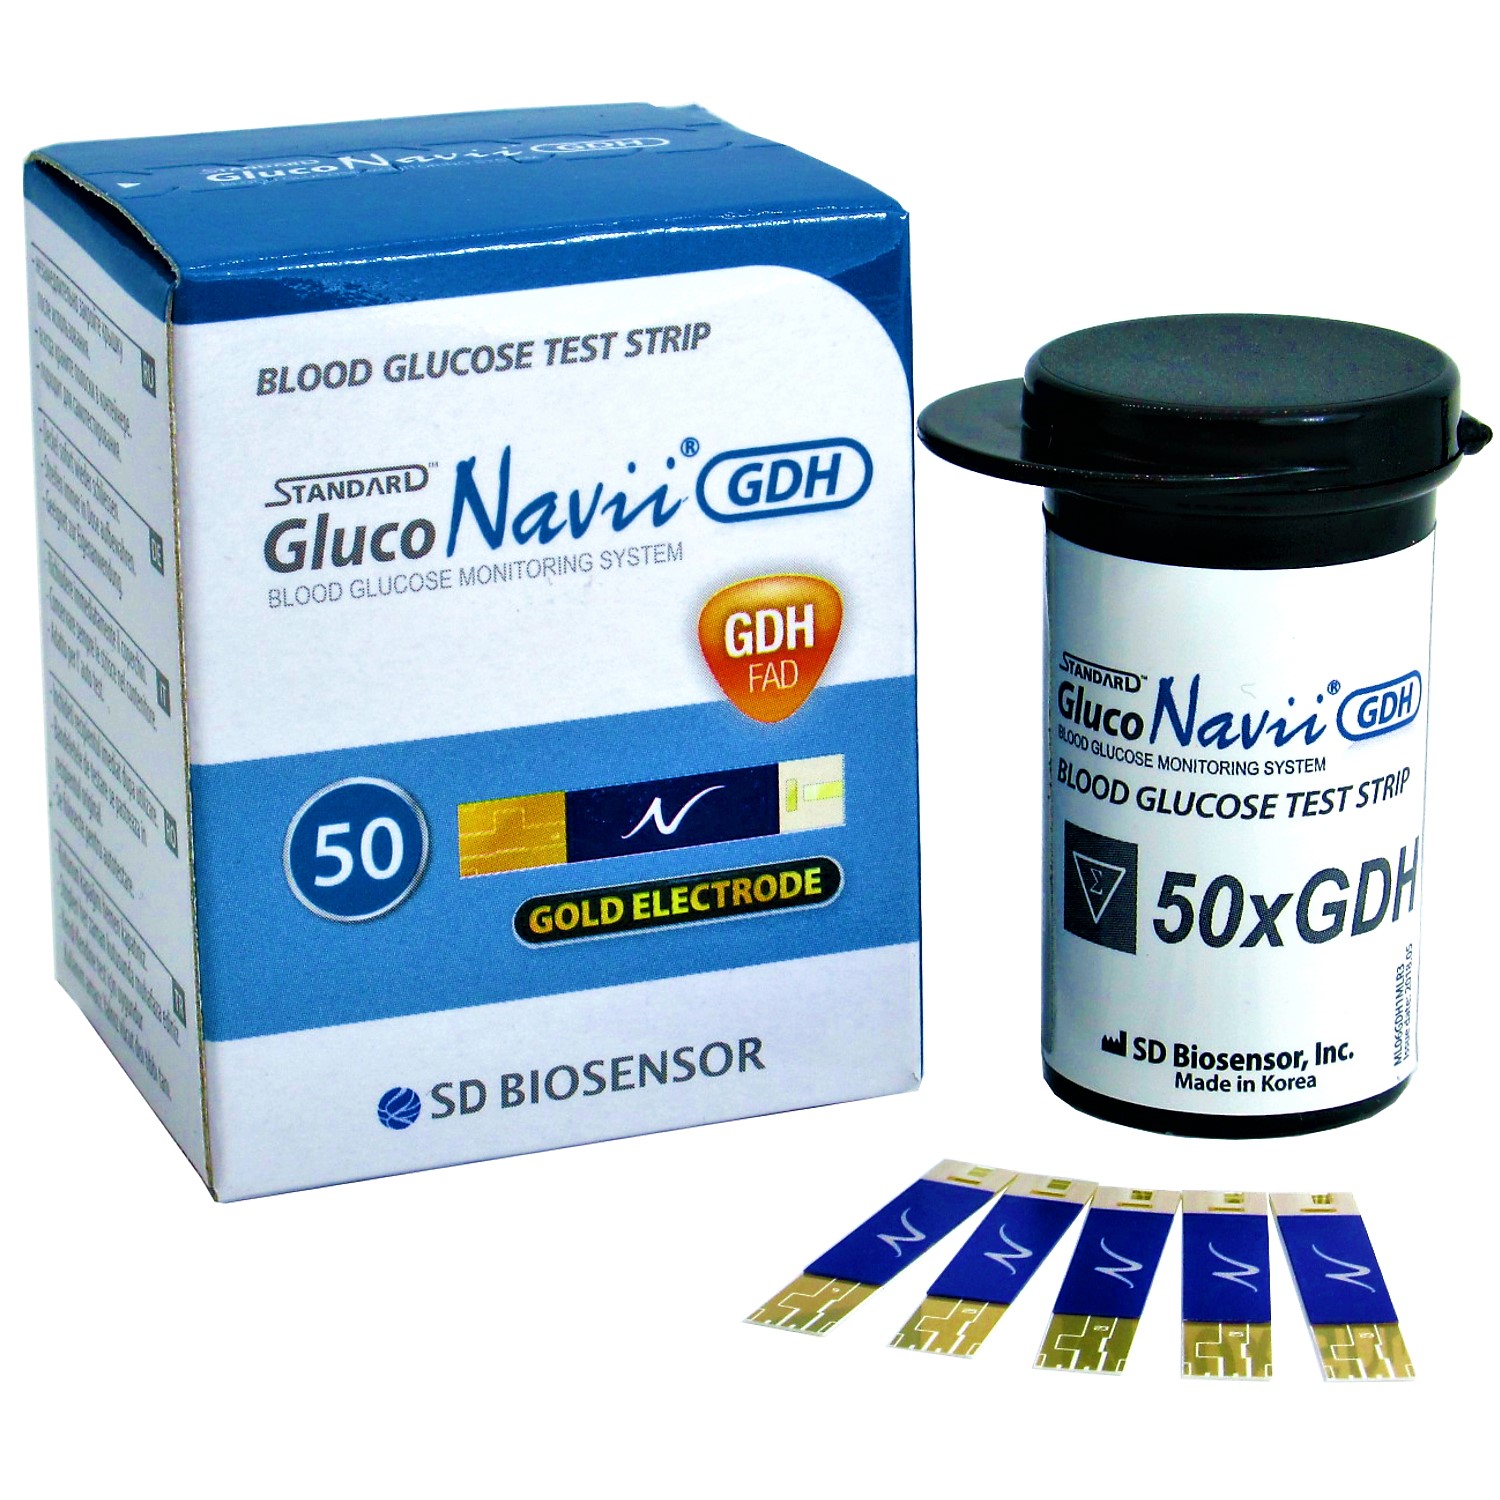 Blood glucose strips